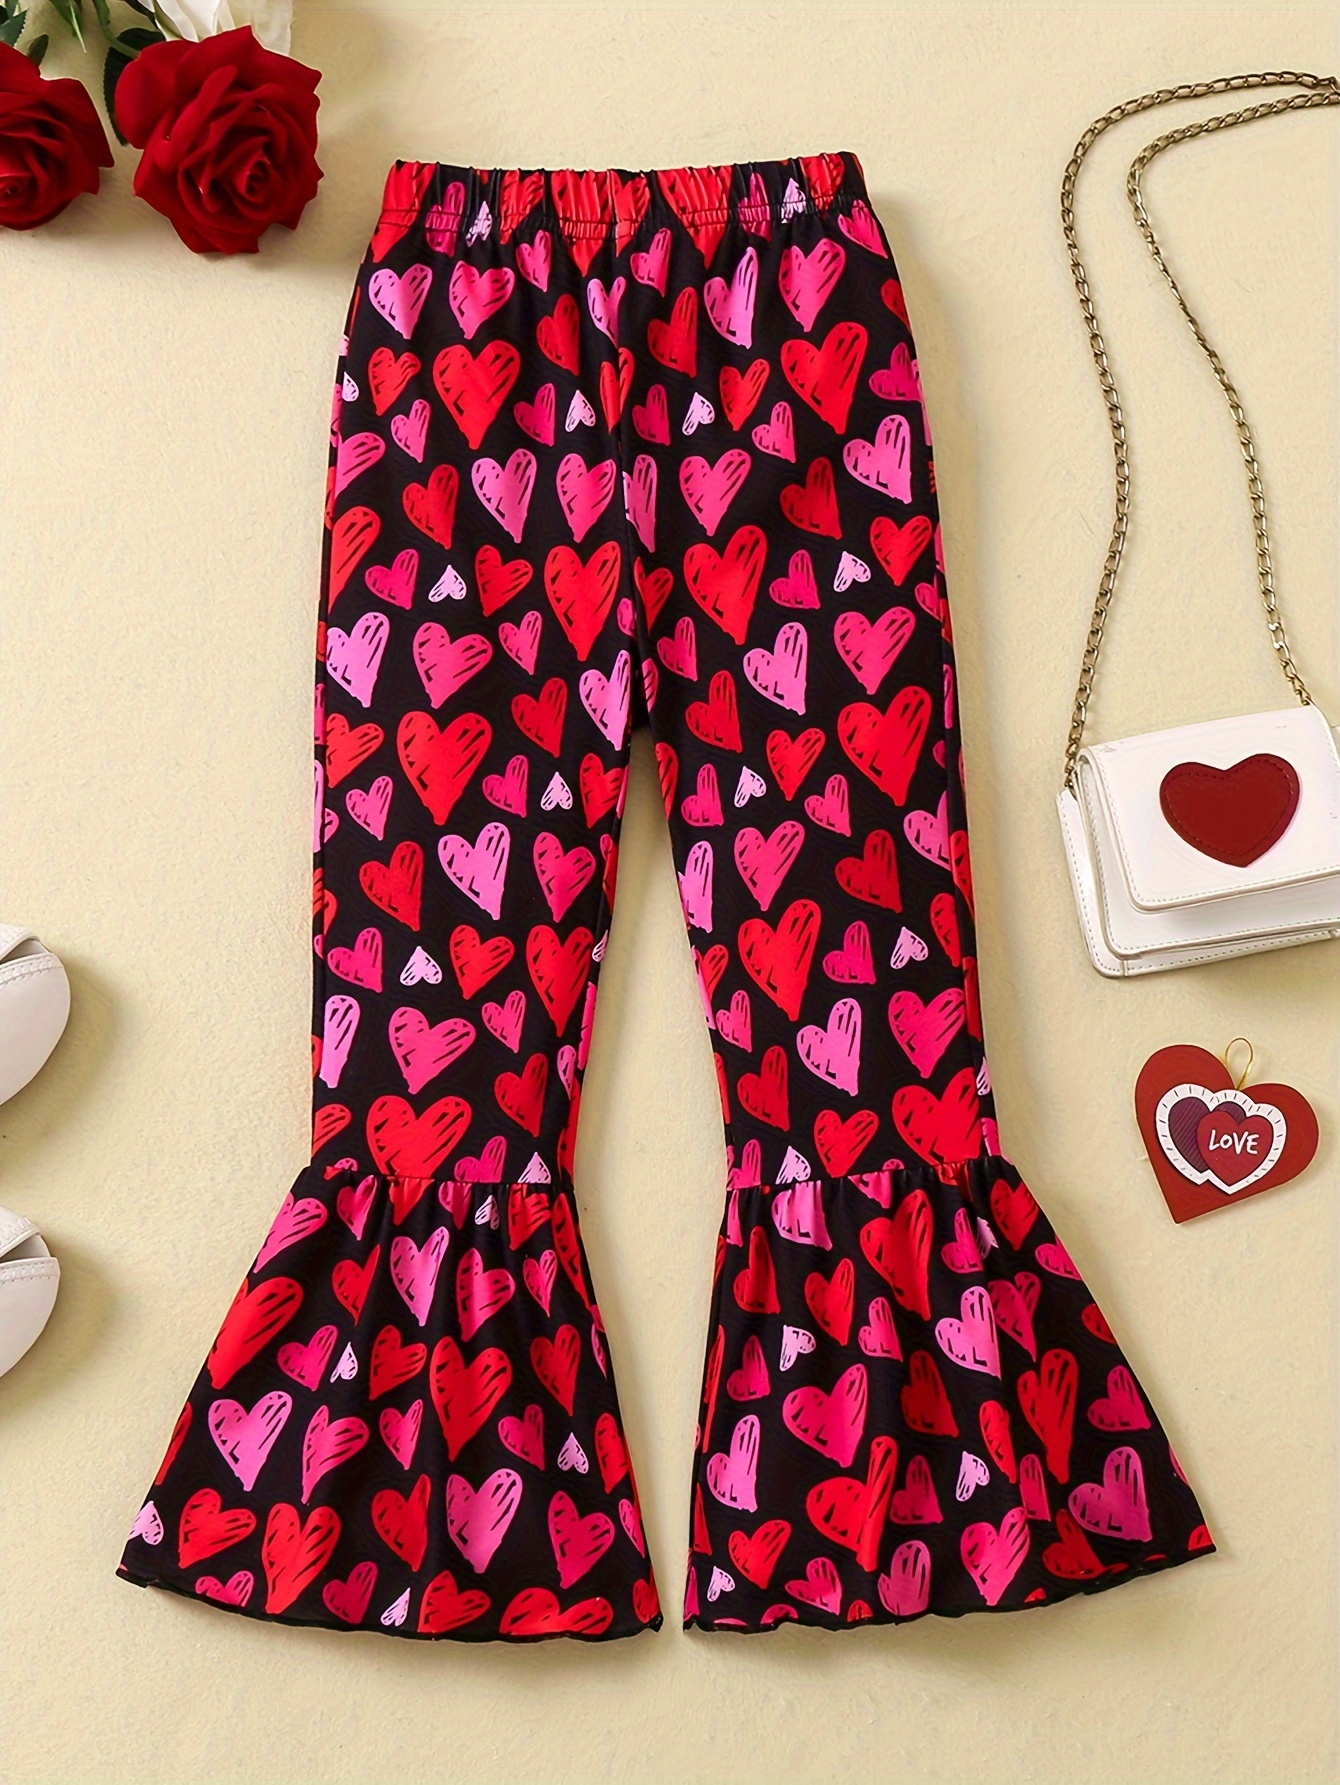 Love-filled Valentine Hearts Leggings